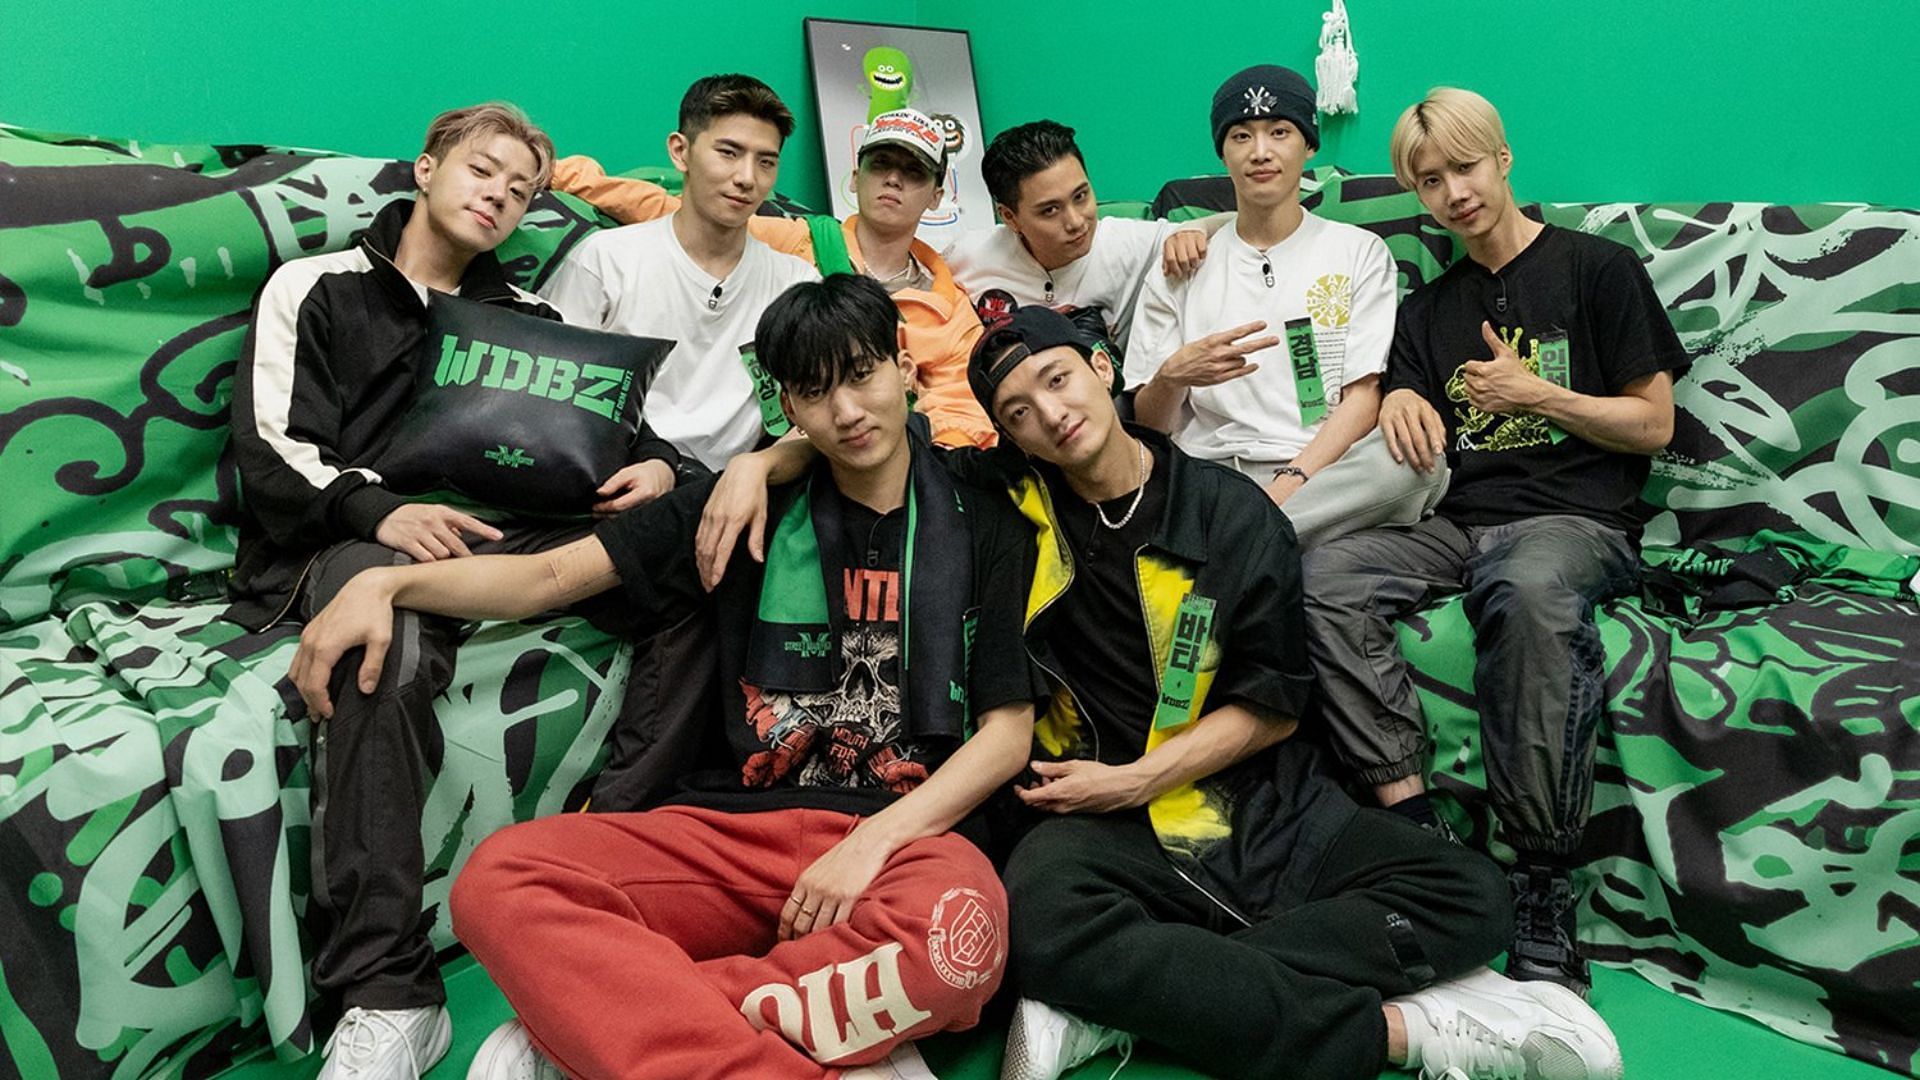 We Dem Boyz dance crew (Image via Mnet)